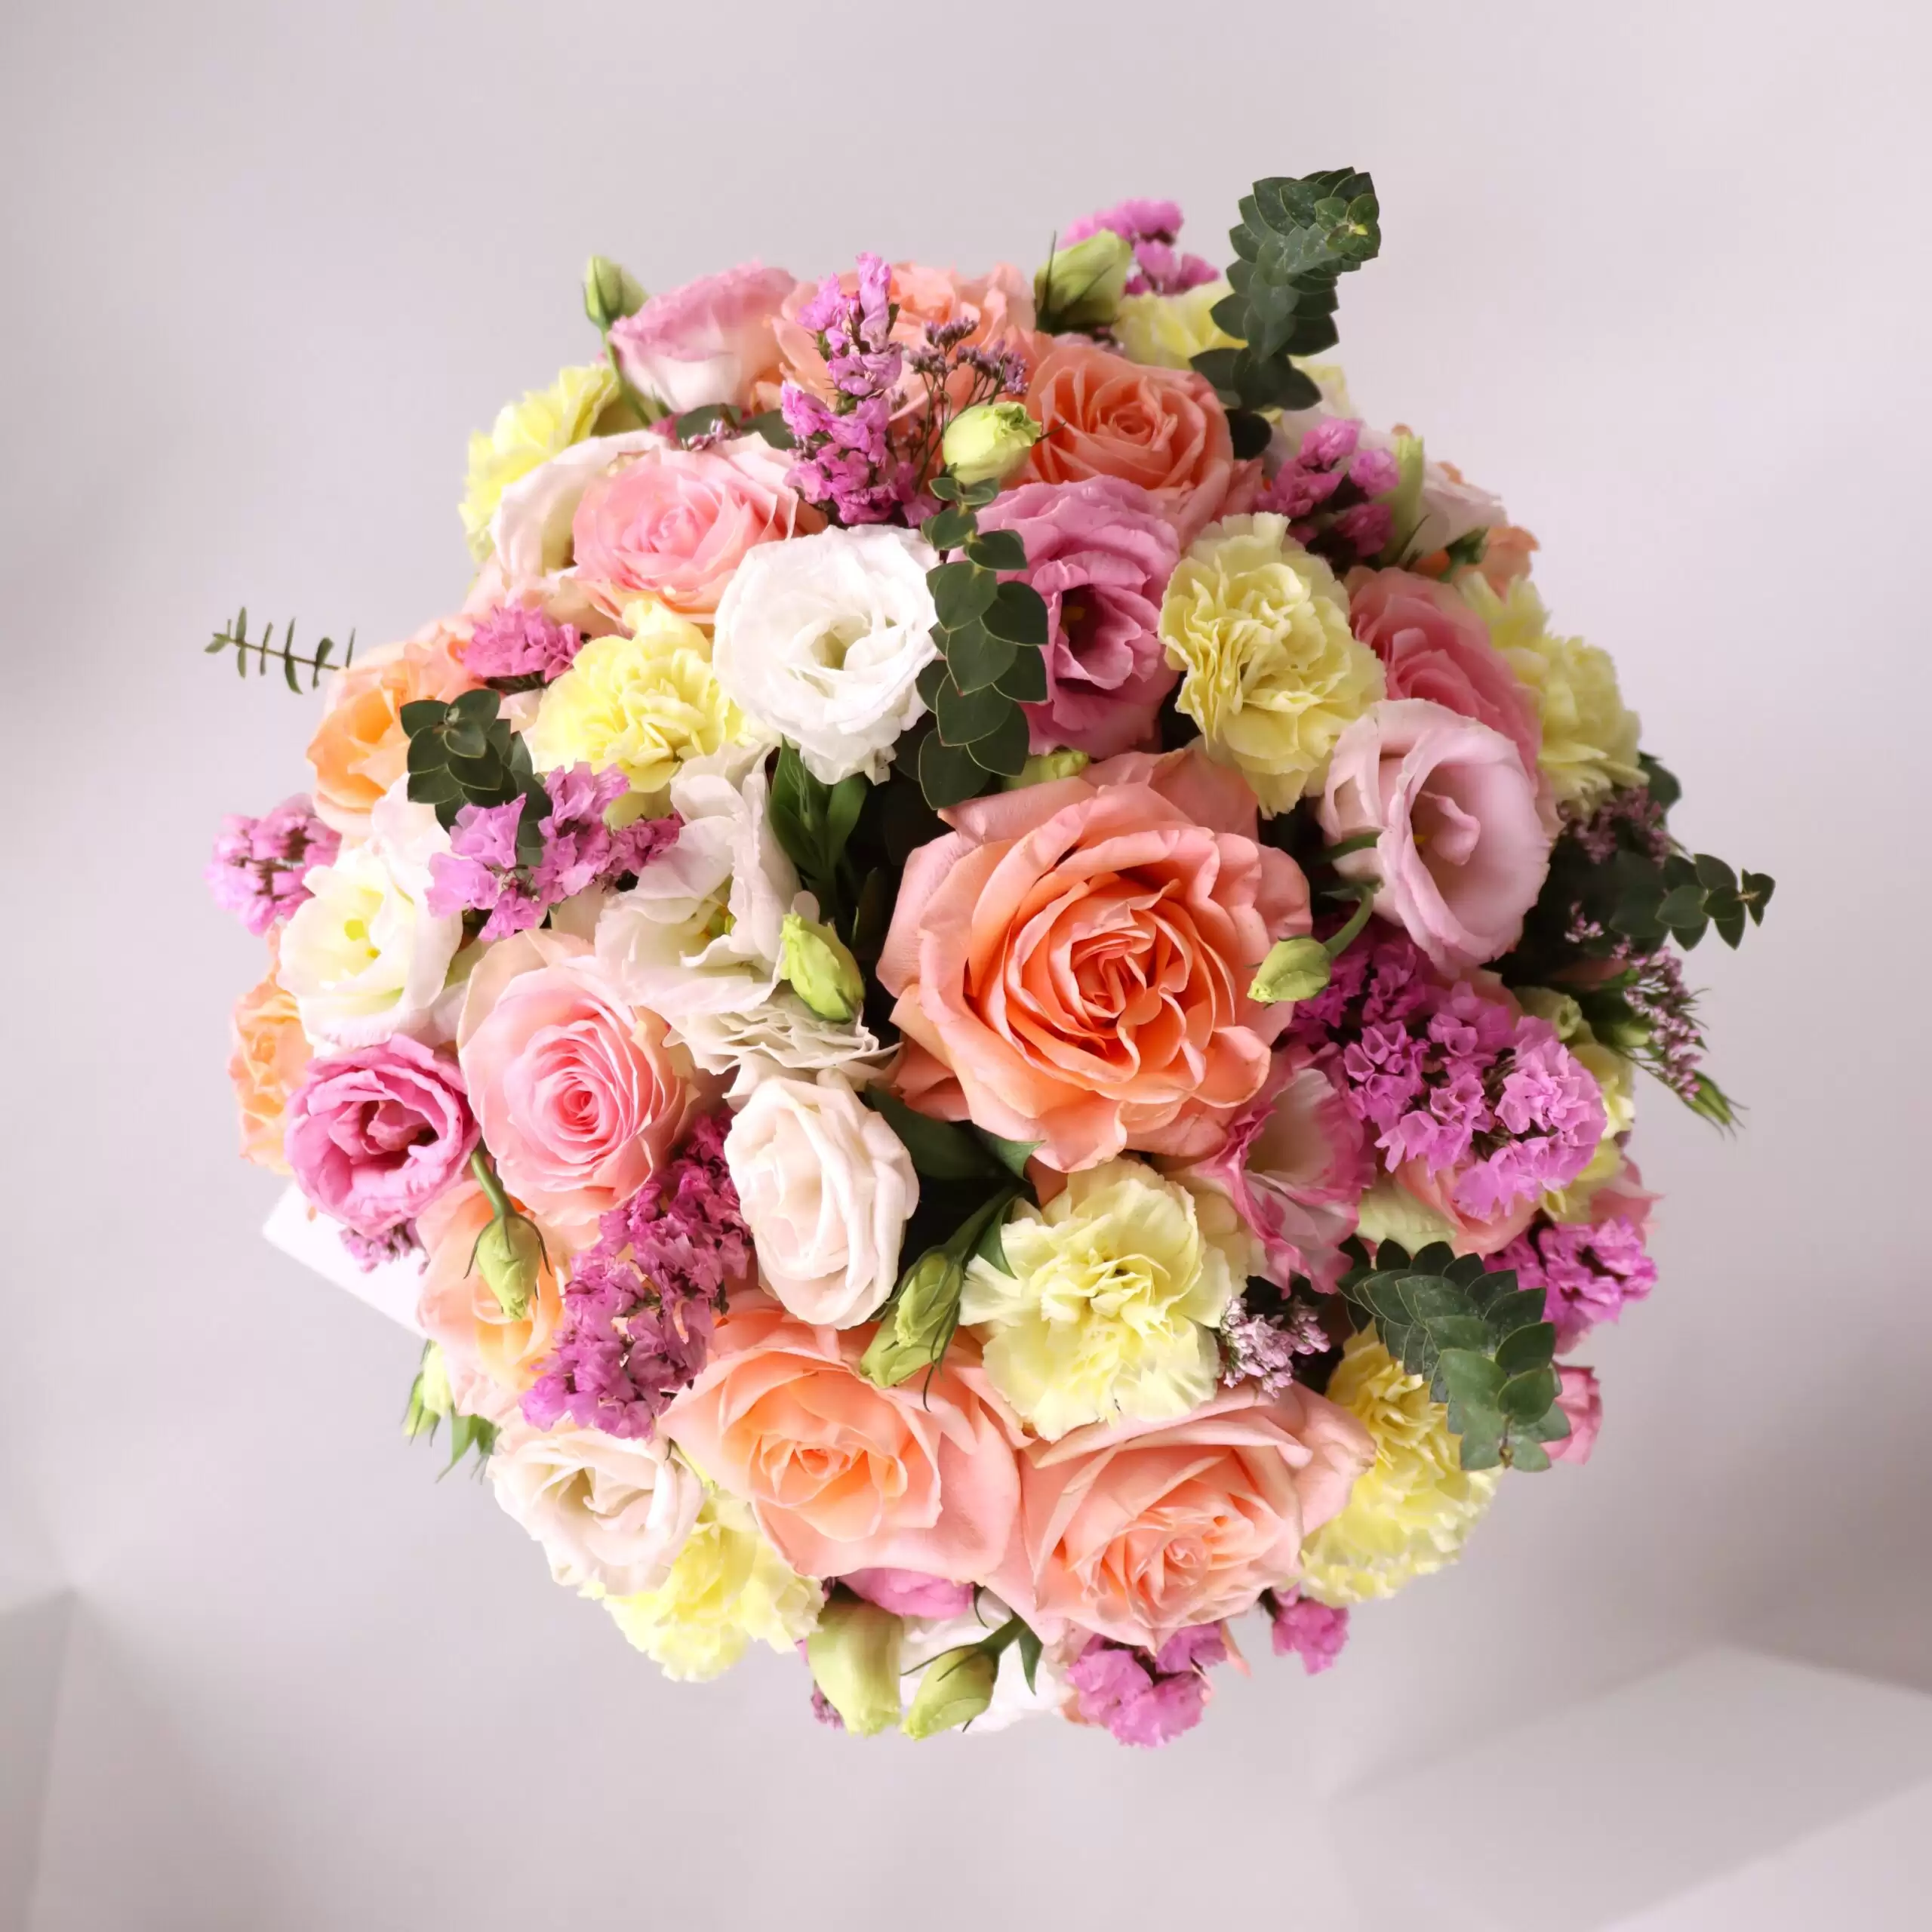 Flowers In A Vase | Gift Flowers Online In Bahrain - Flora D'lite